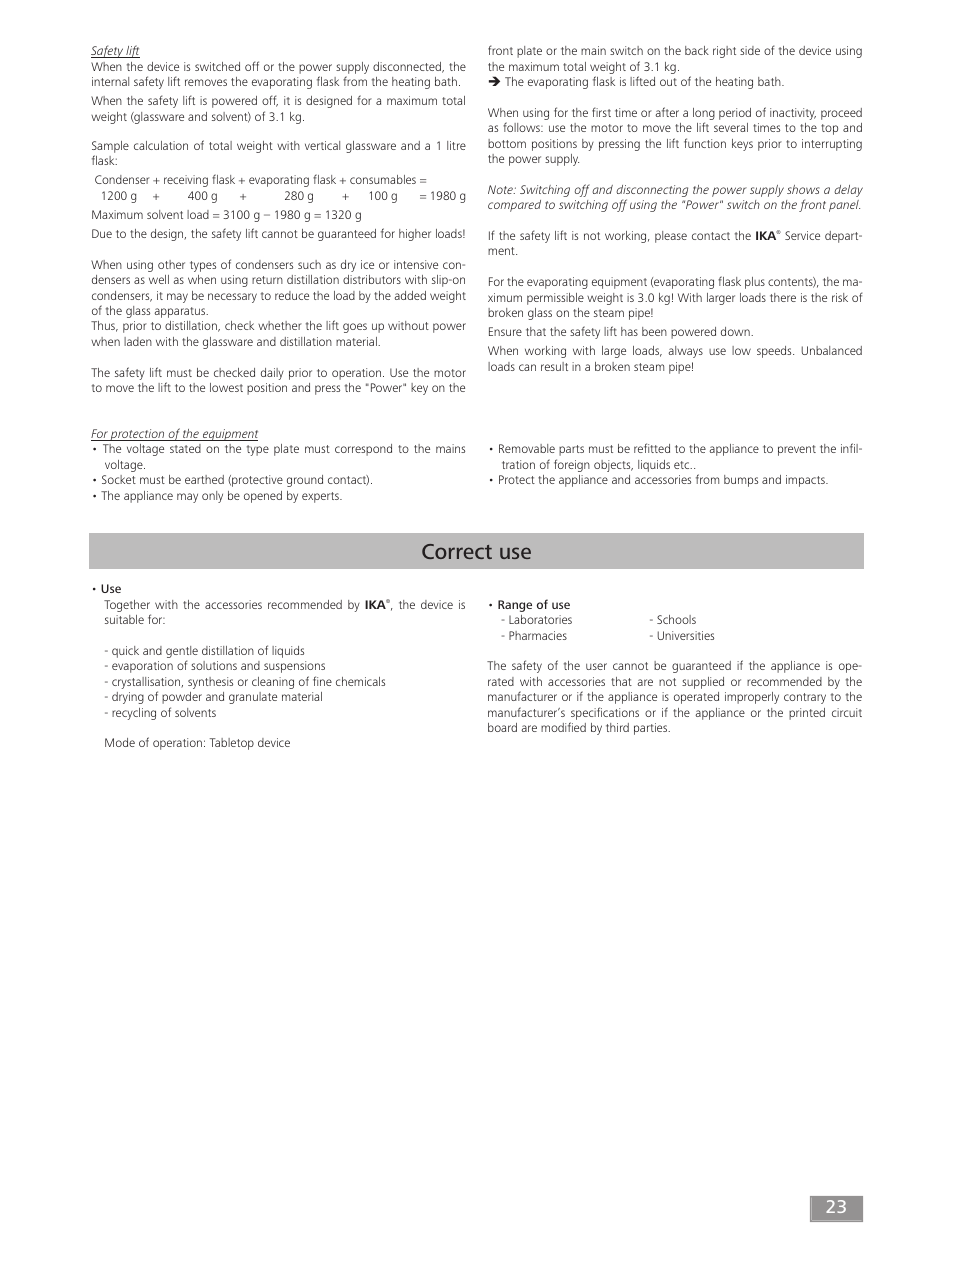 Correct use | IKA RV 10 digital FLEX User Manual | Page 23 / 84